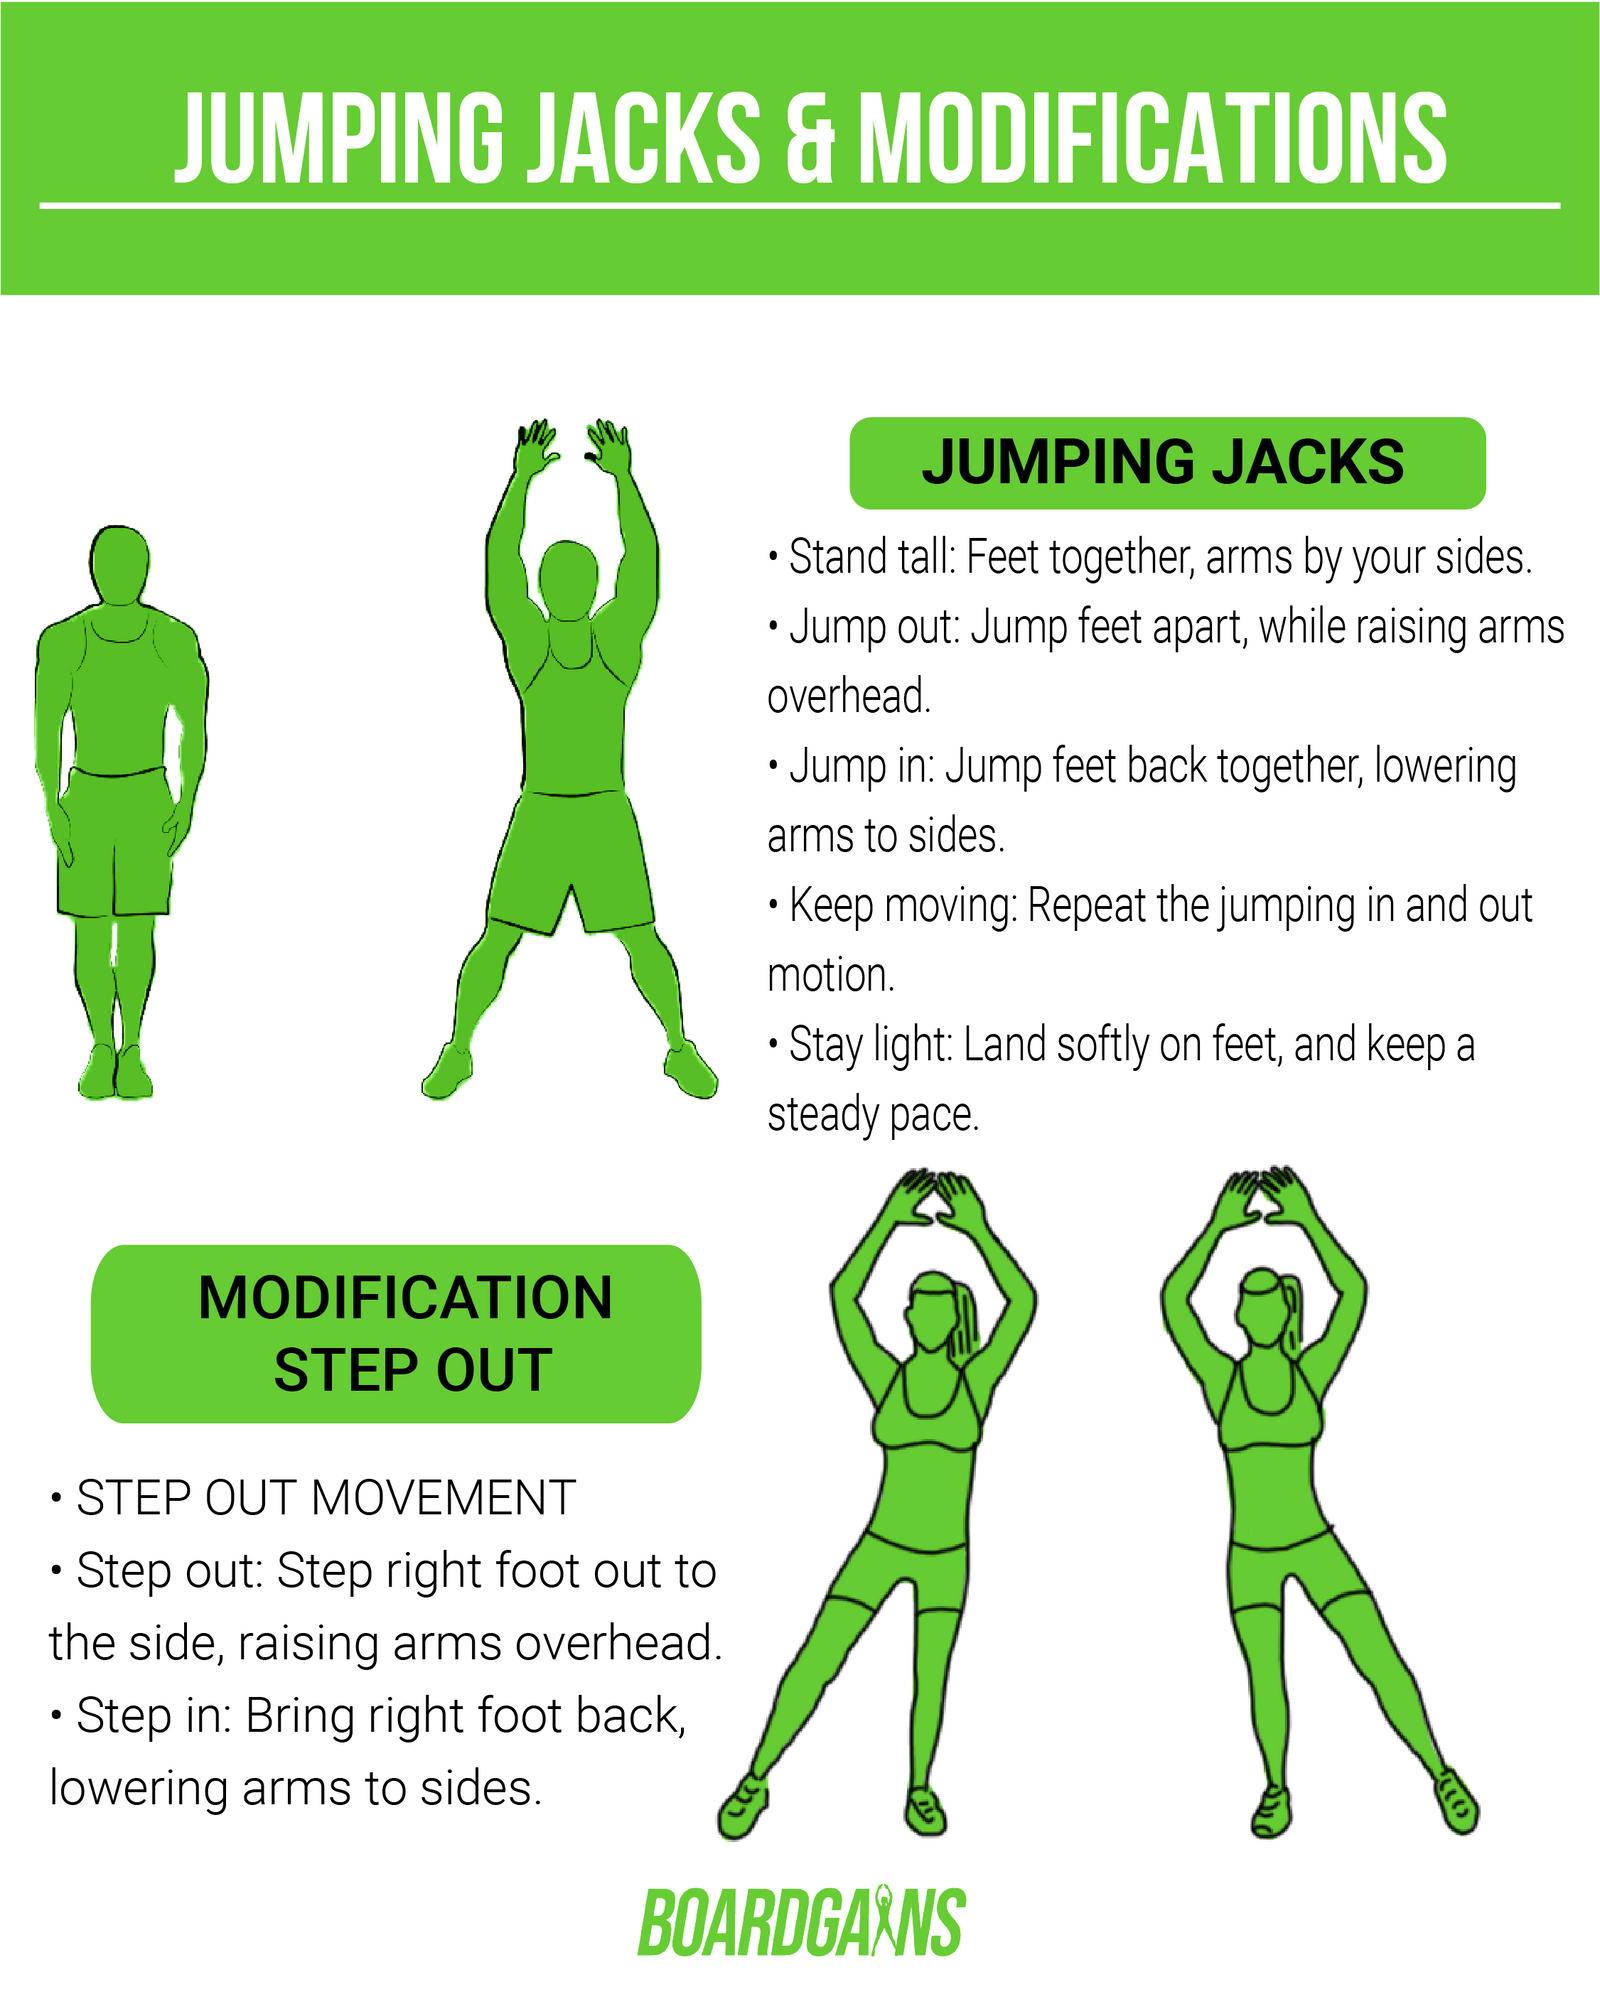 Jumping jack exercises